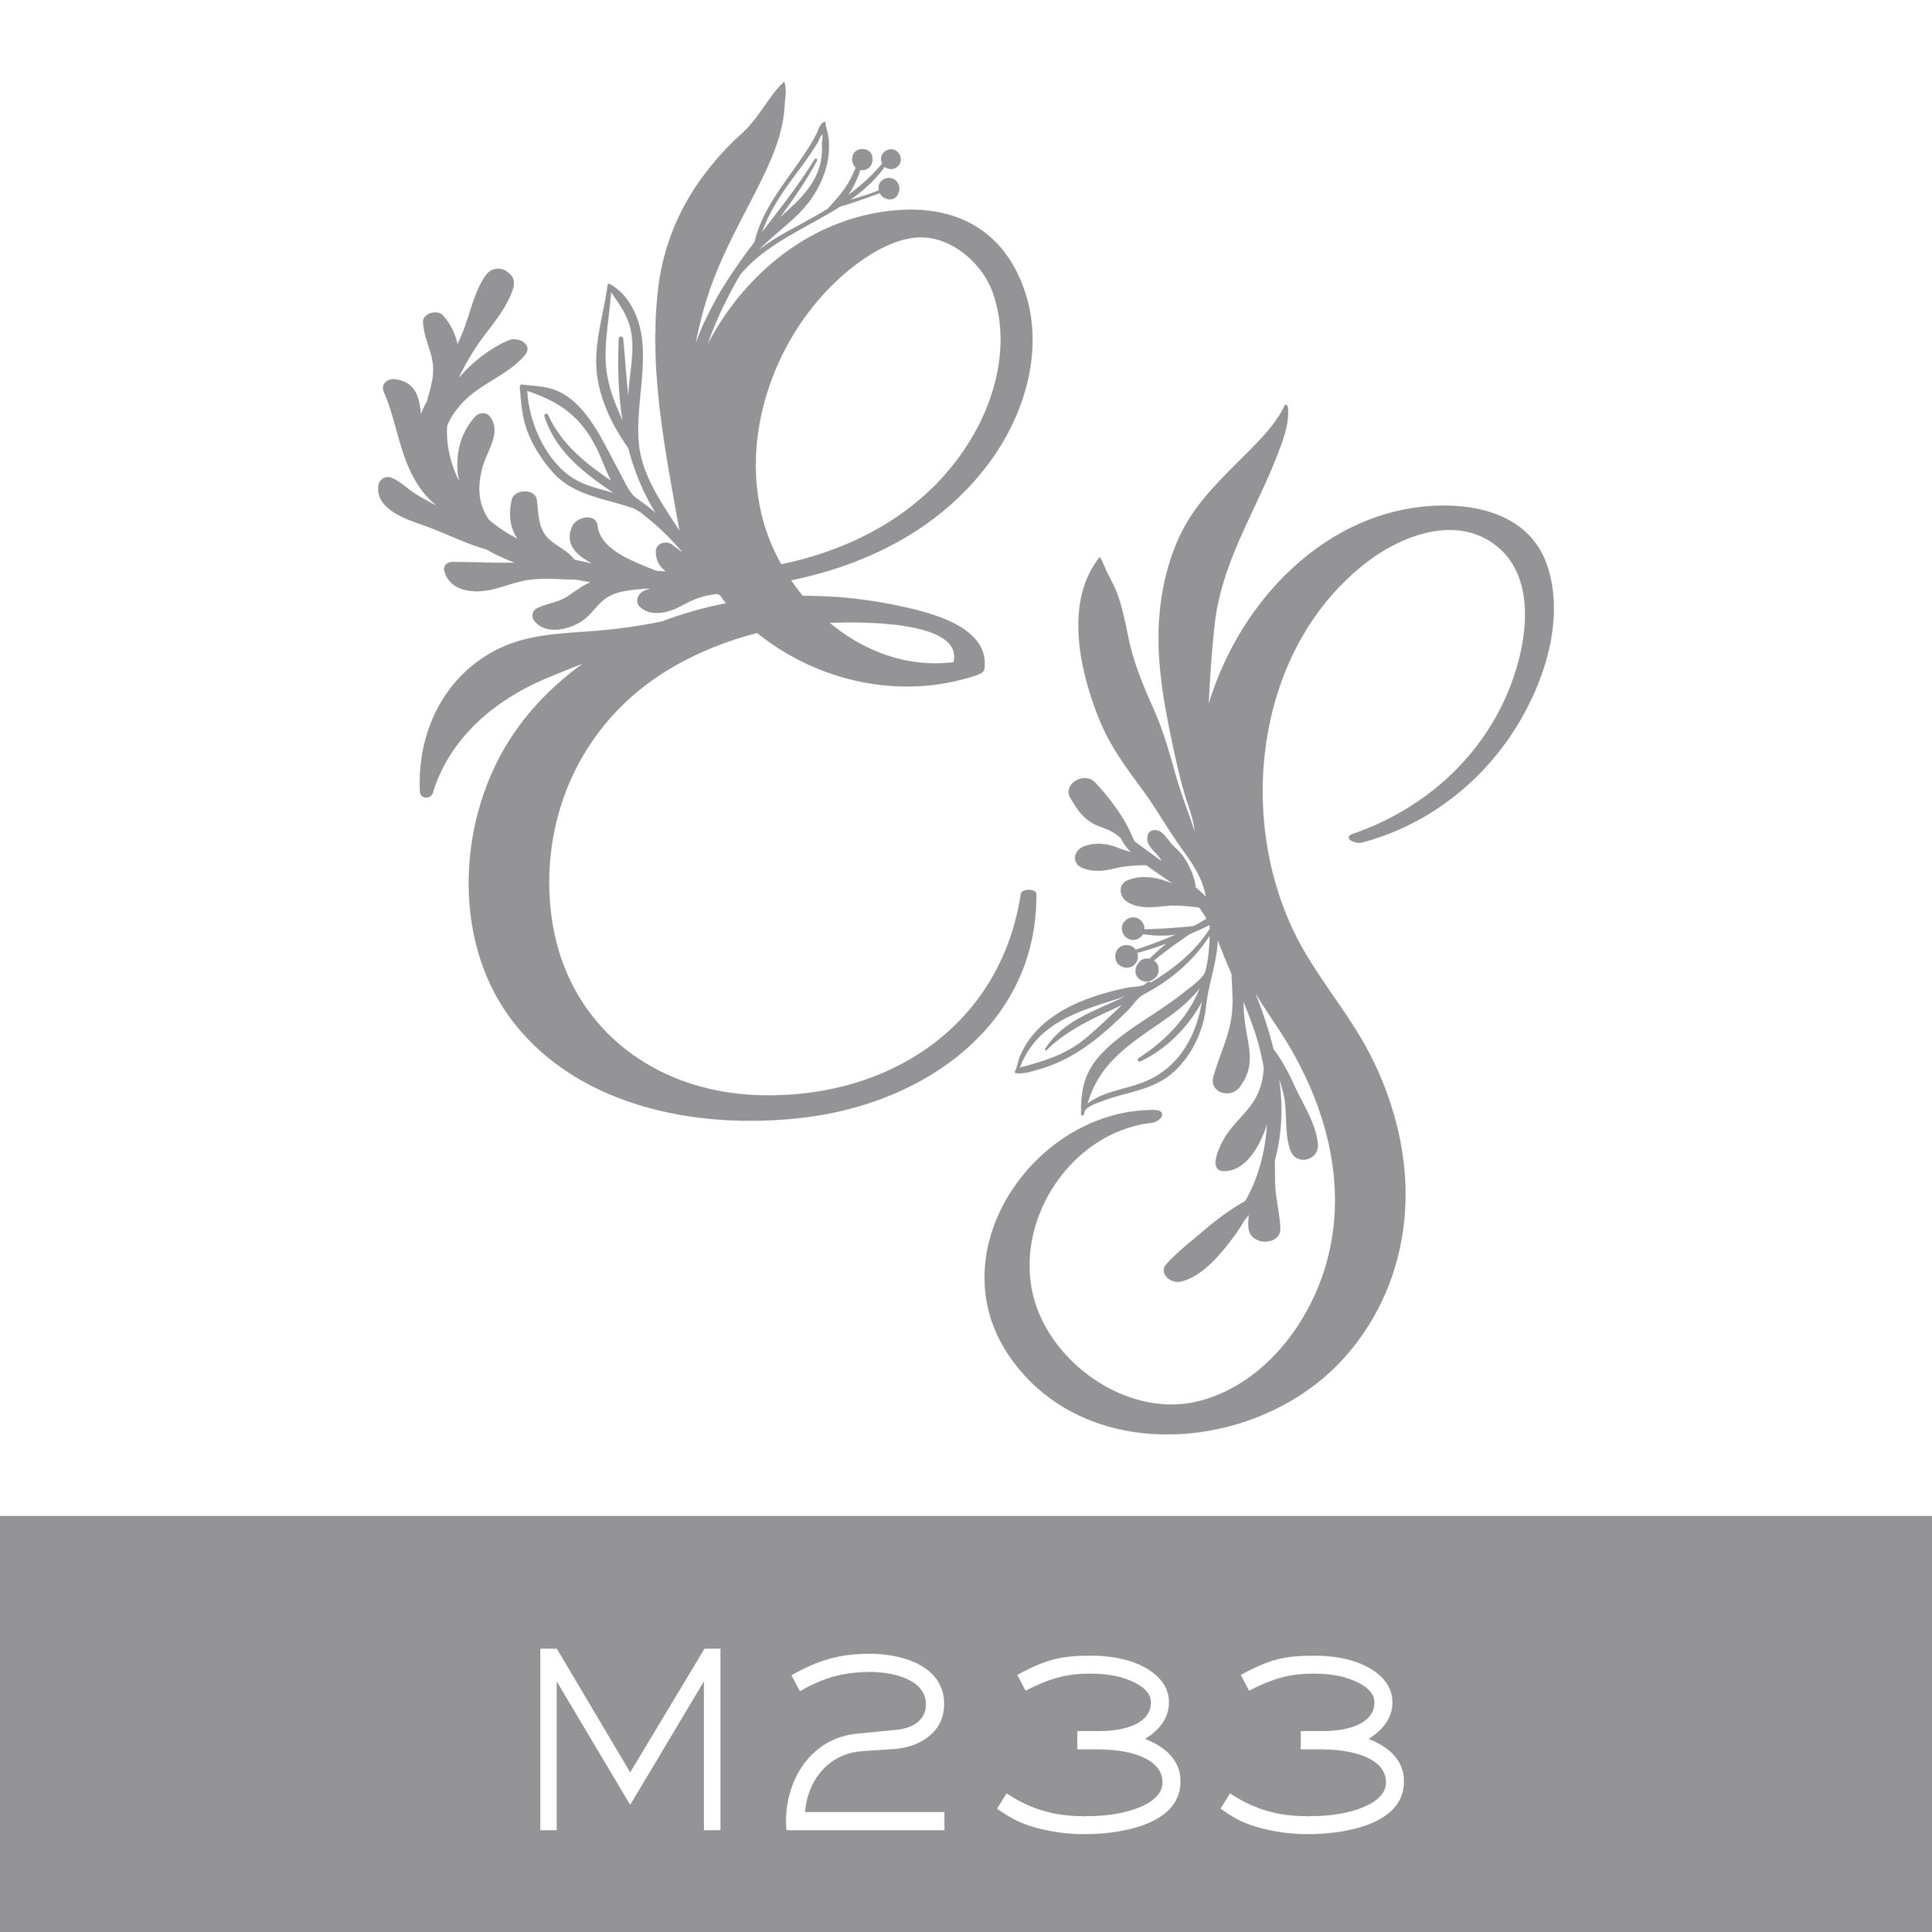 M233.jpg